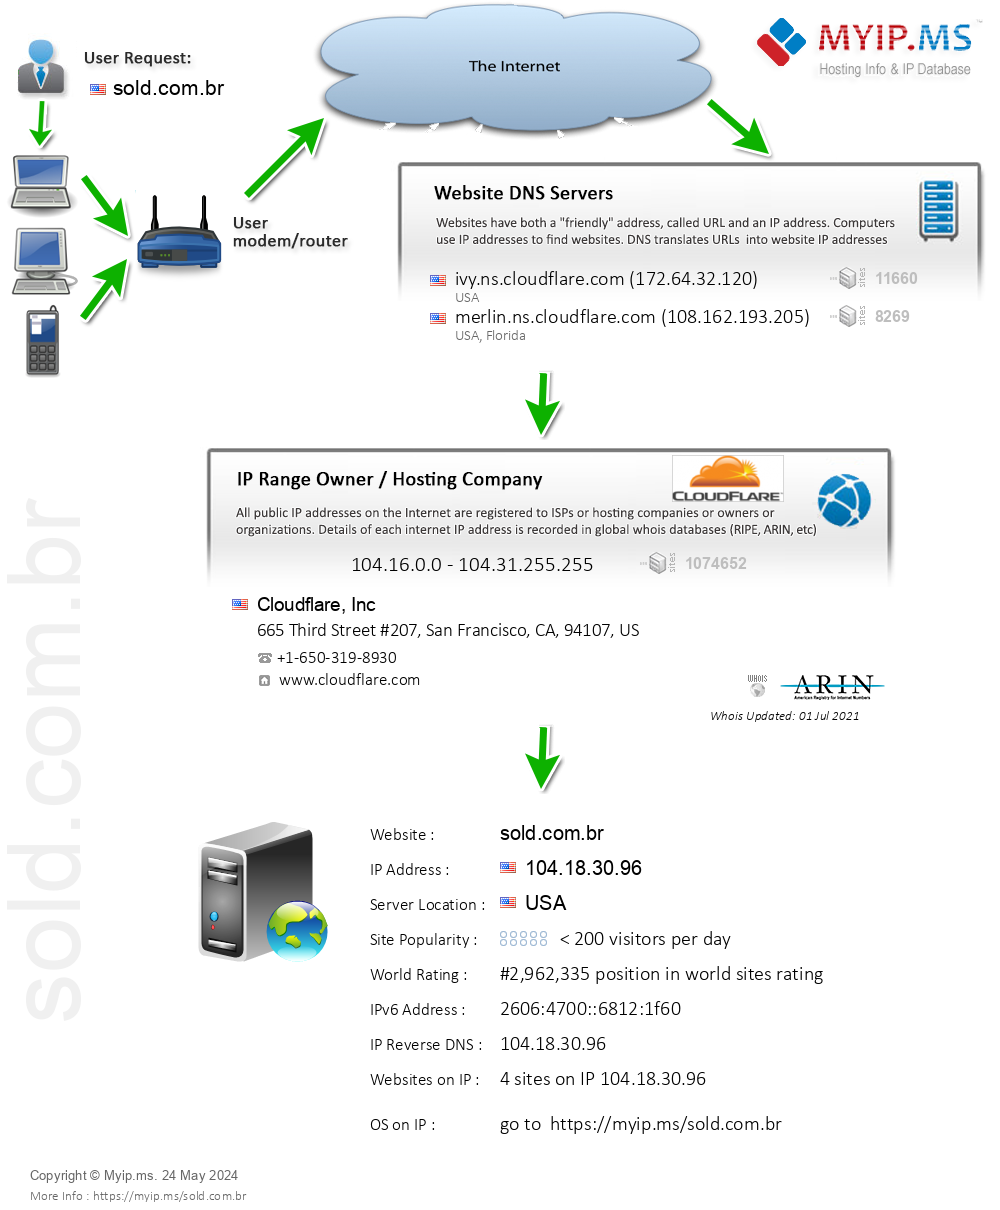 Sold.com.br - Website Hosting Visual IP Diagram